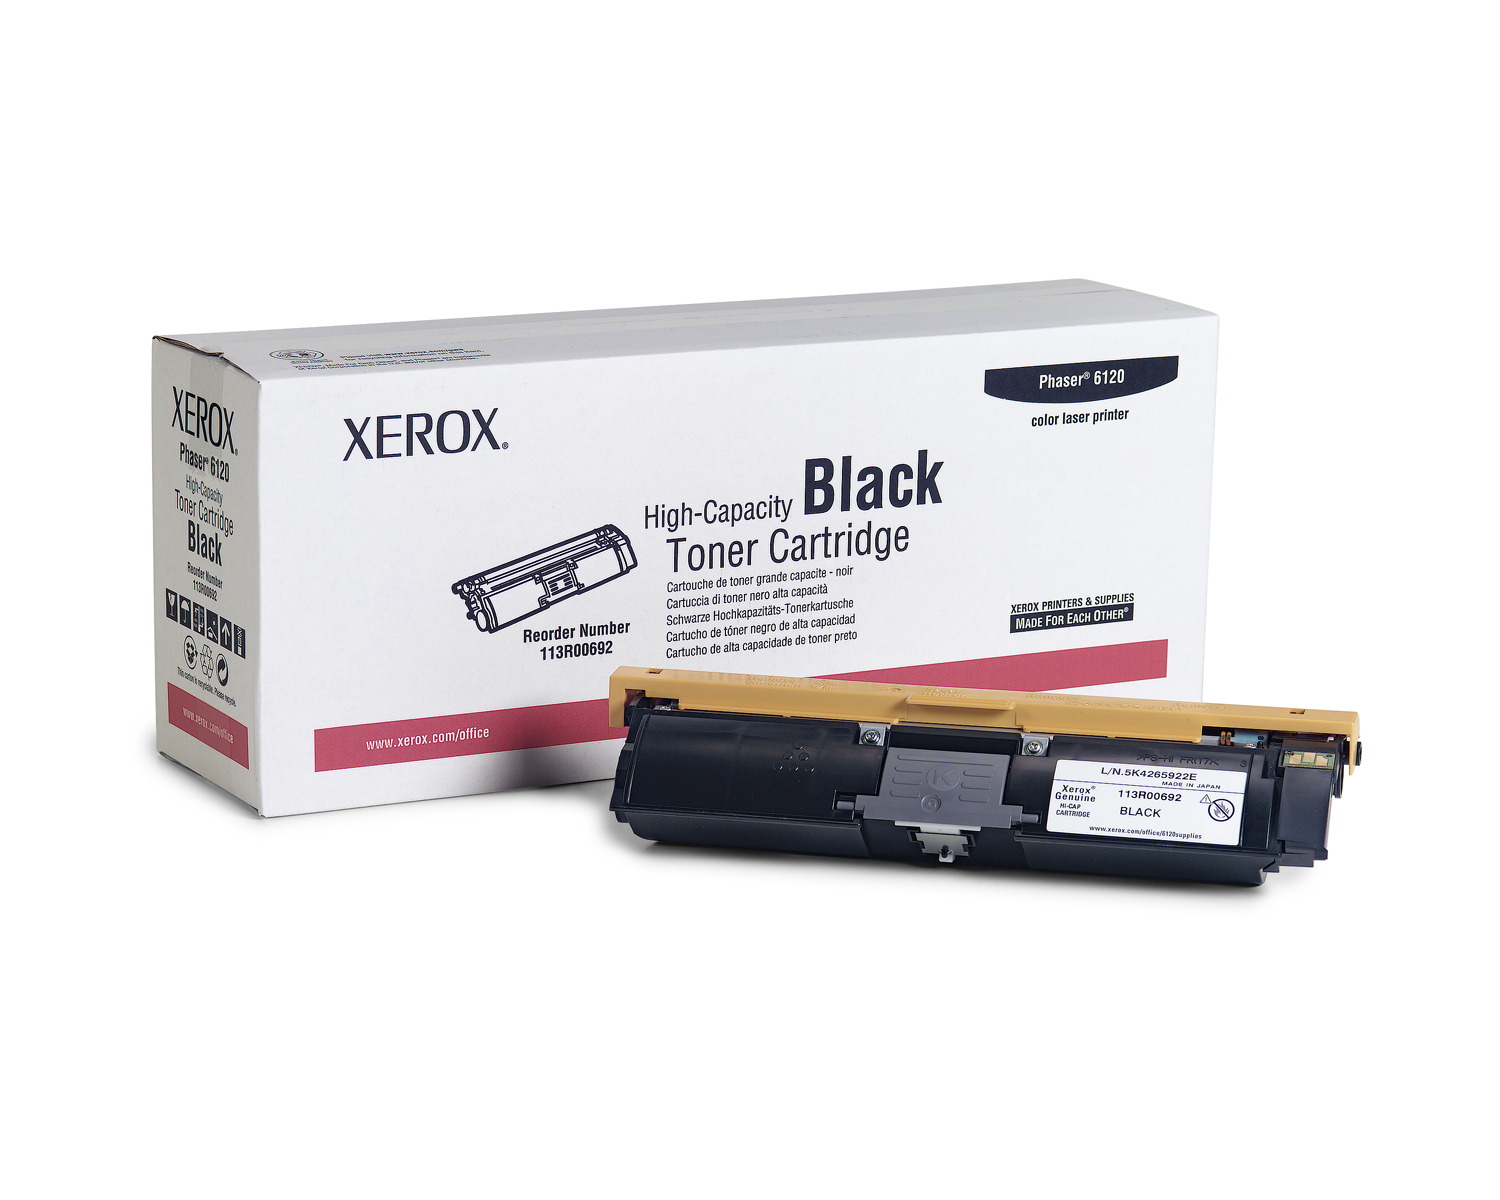 XEROX svart toner 4.500 sidor